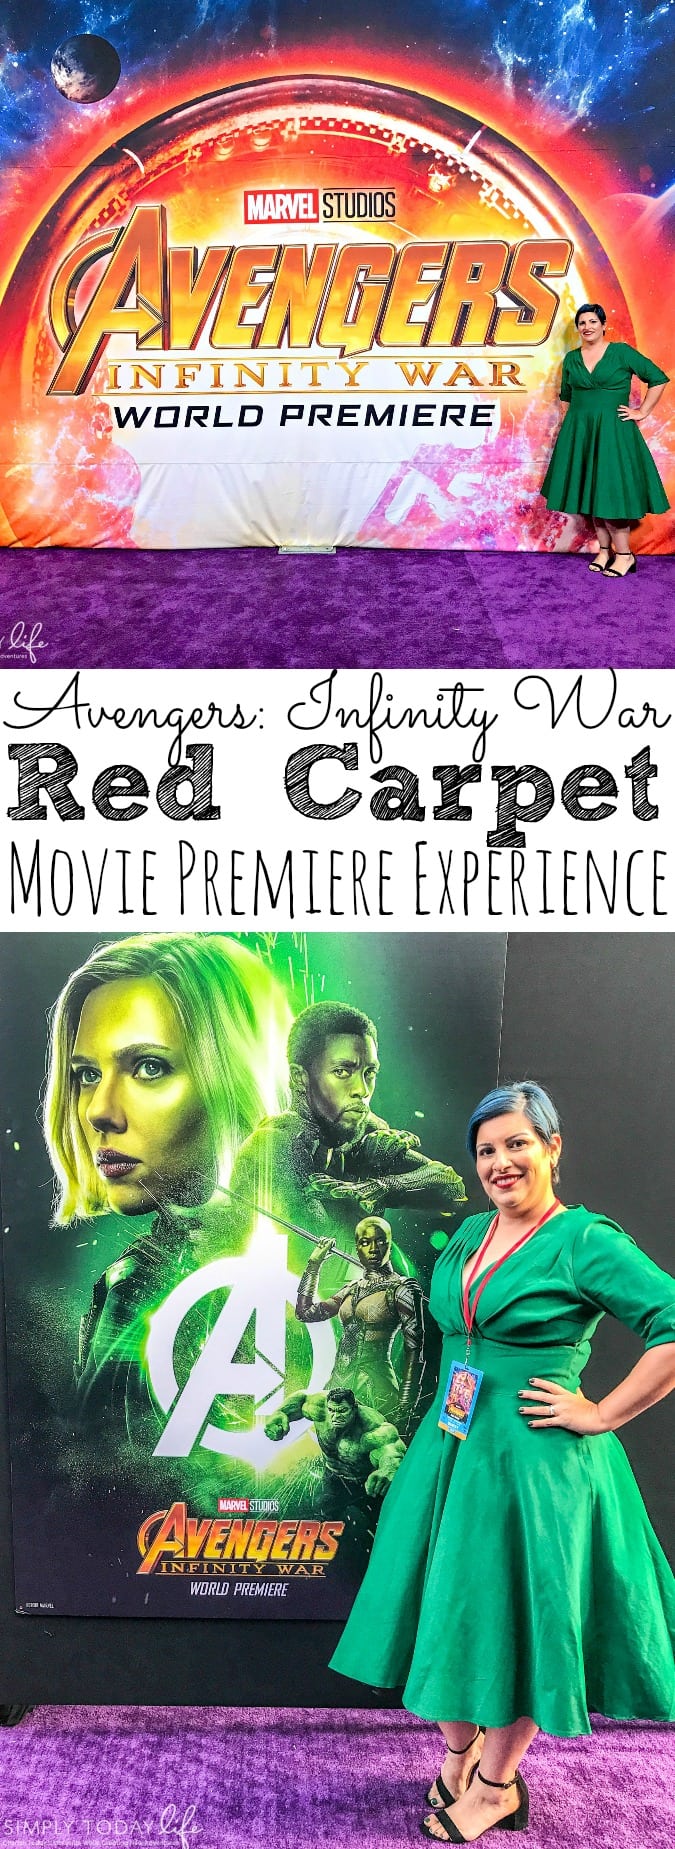 Avengers Infinity War Red Carpet Premiere